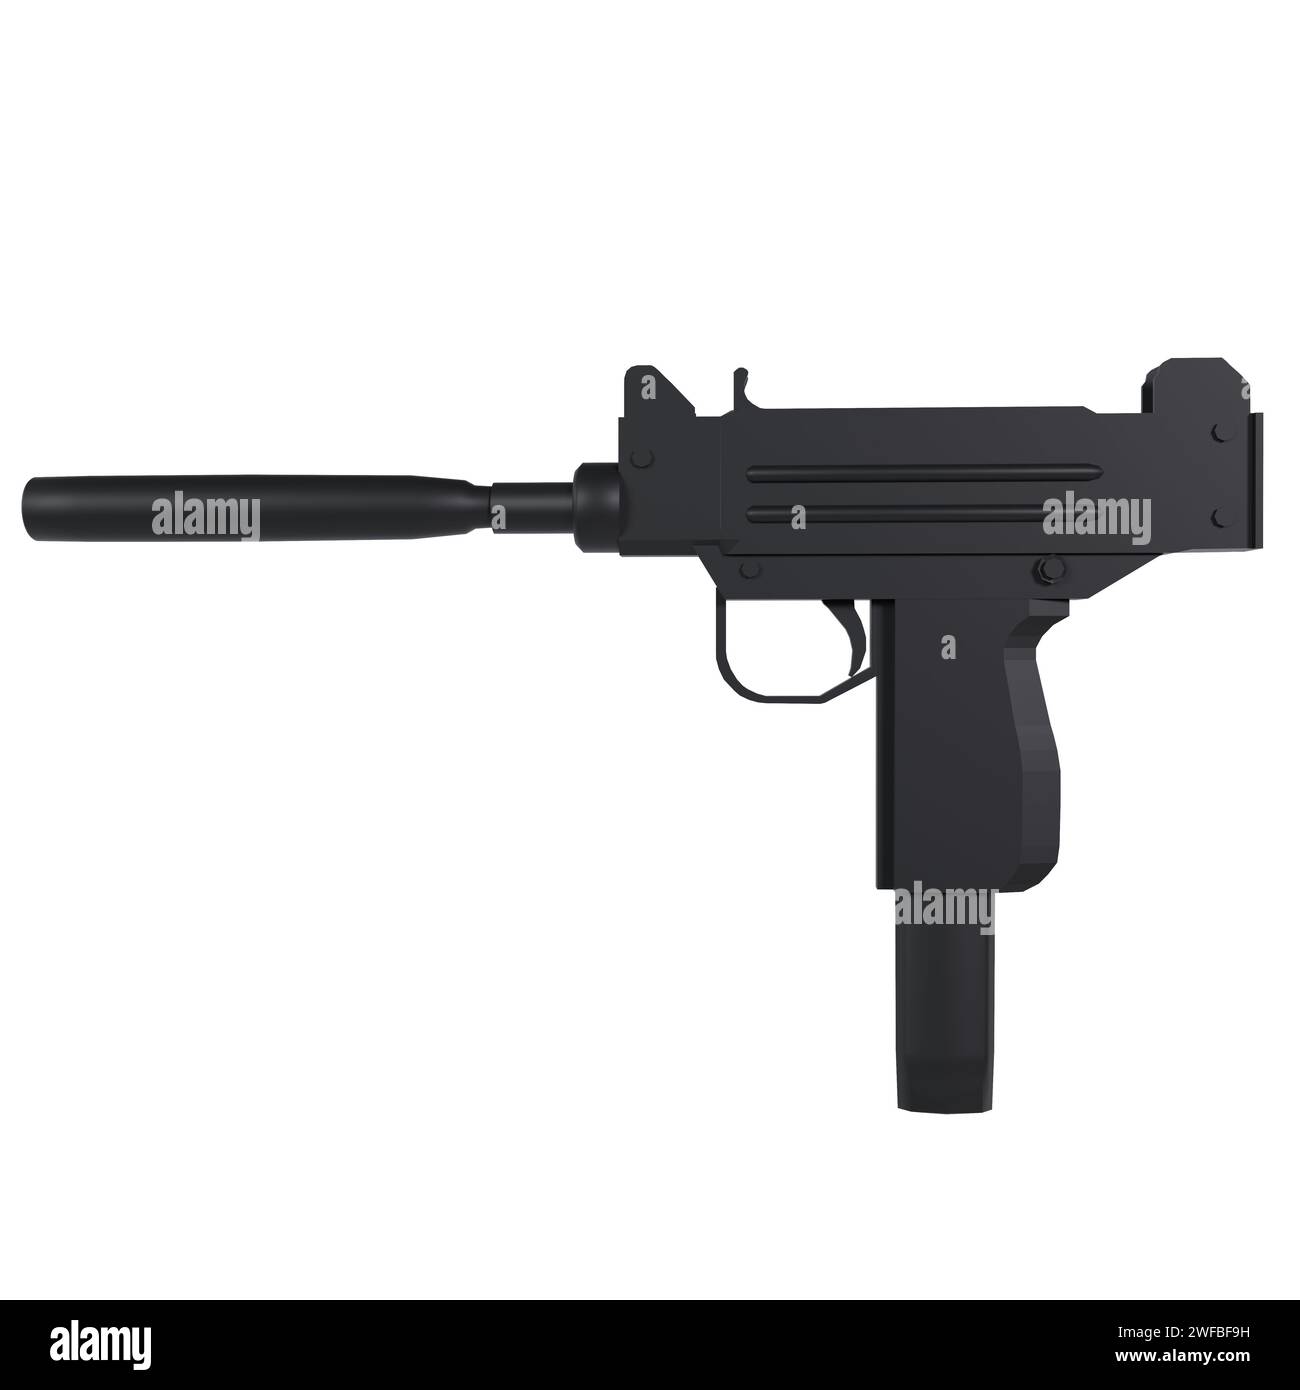 Uzi Weapon isolated on white background. High quality 3d illustration Stock Photo